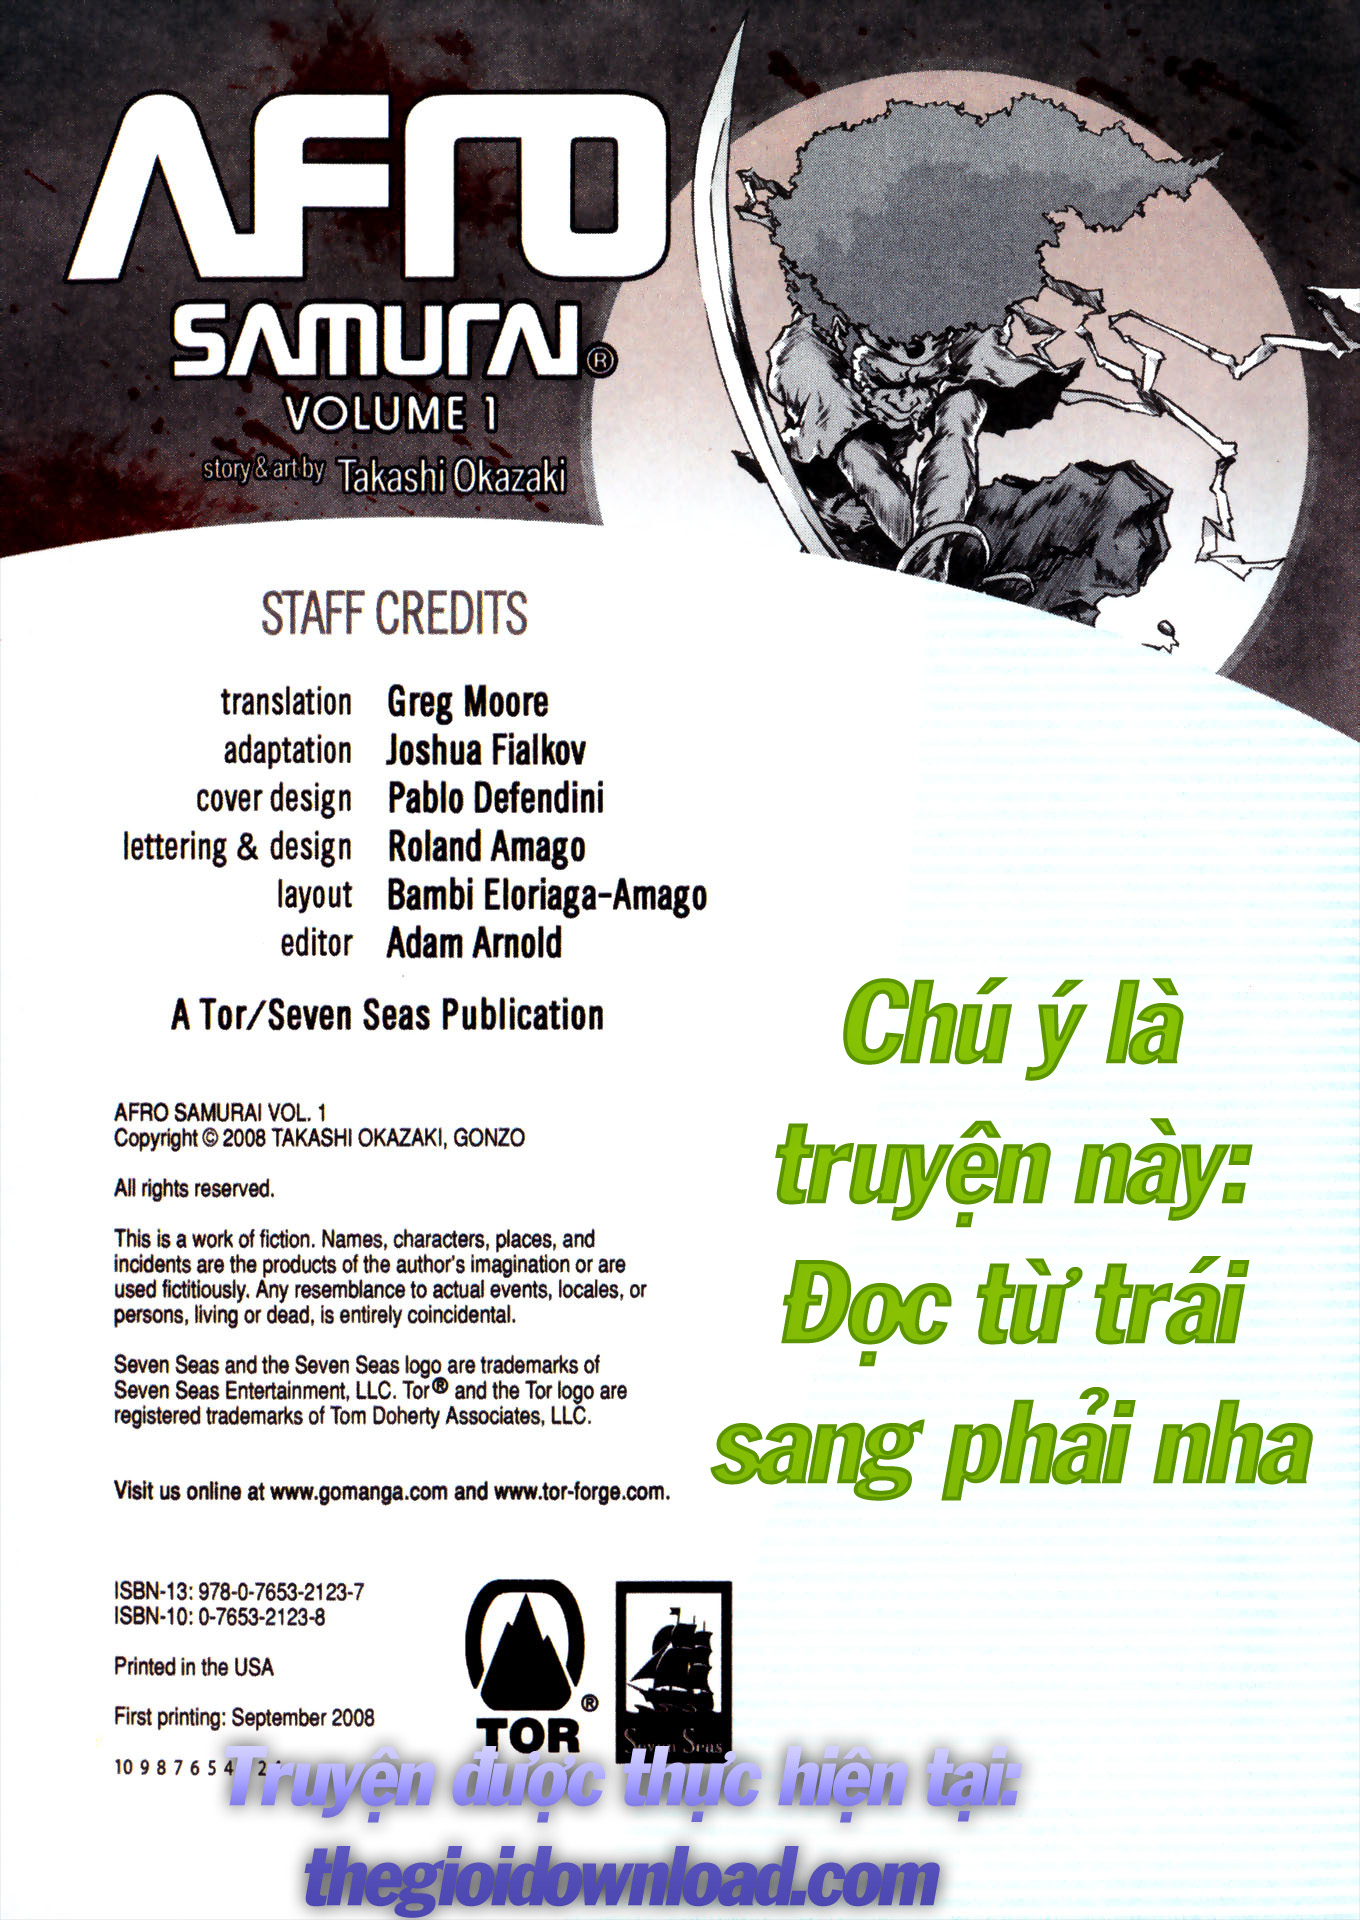 Afro samurai - Samurai báo thù